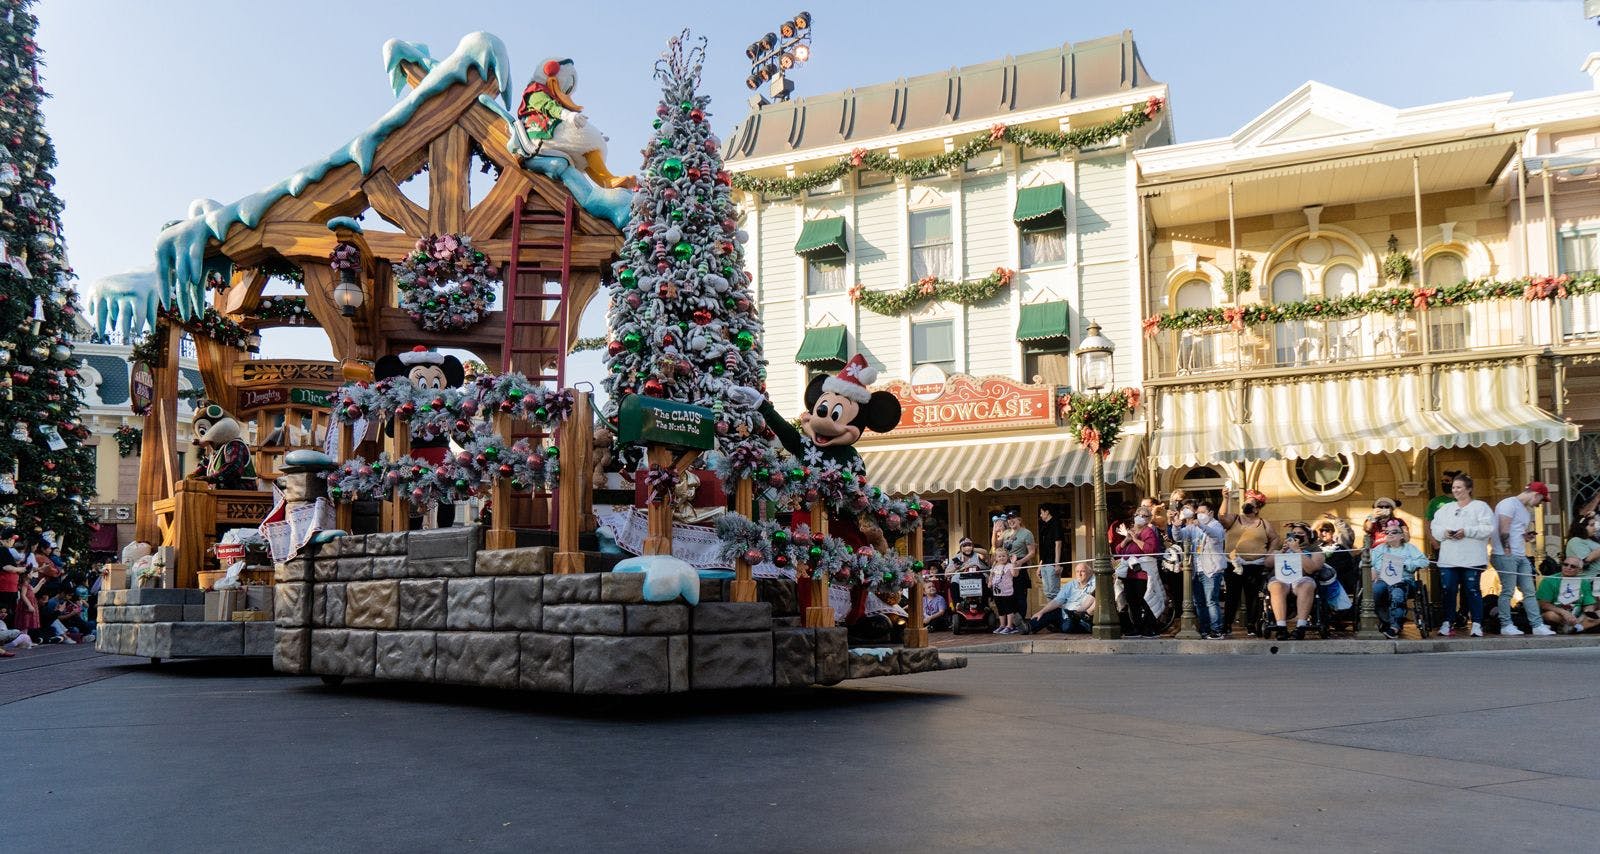 A festive-themed float moves through Main Street in Disney World